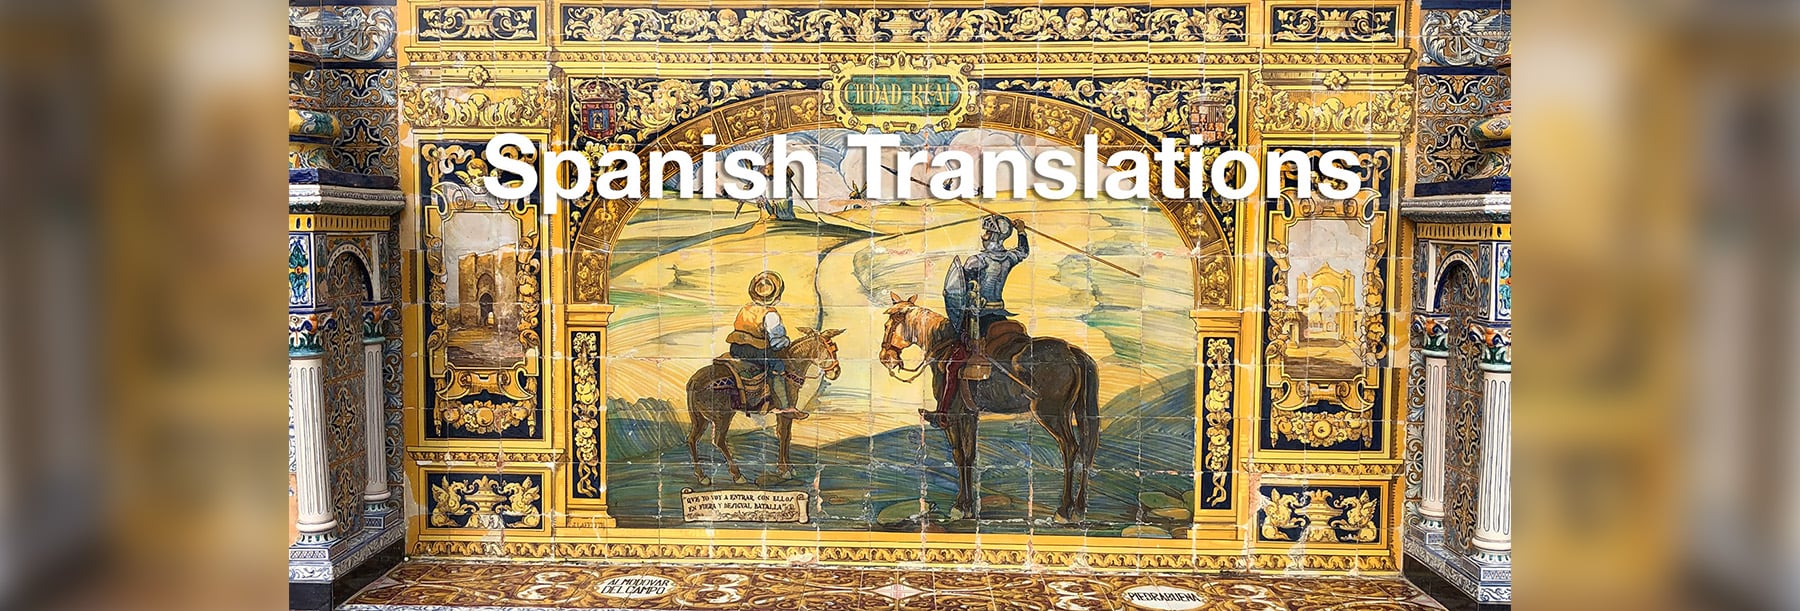 Spanish Translations